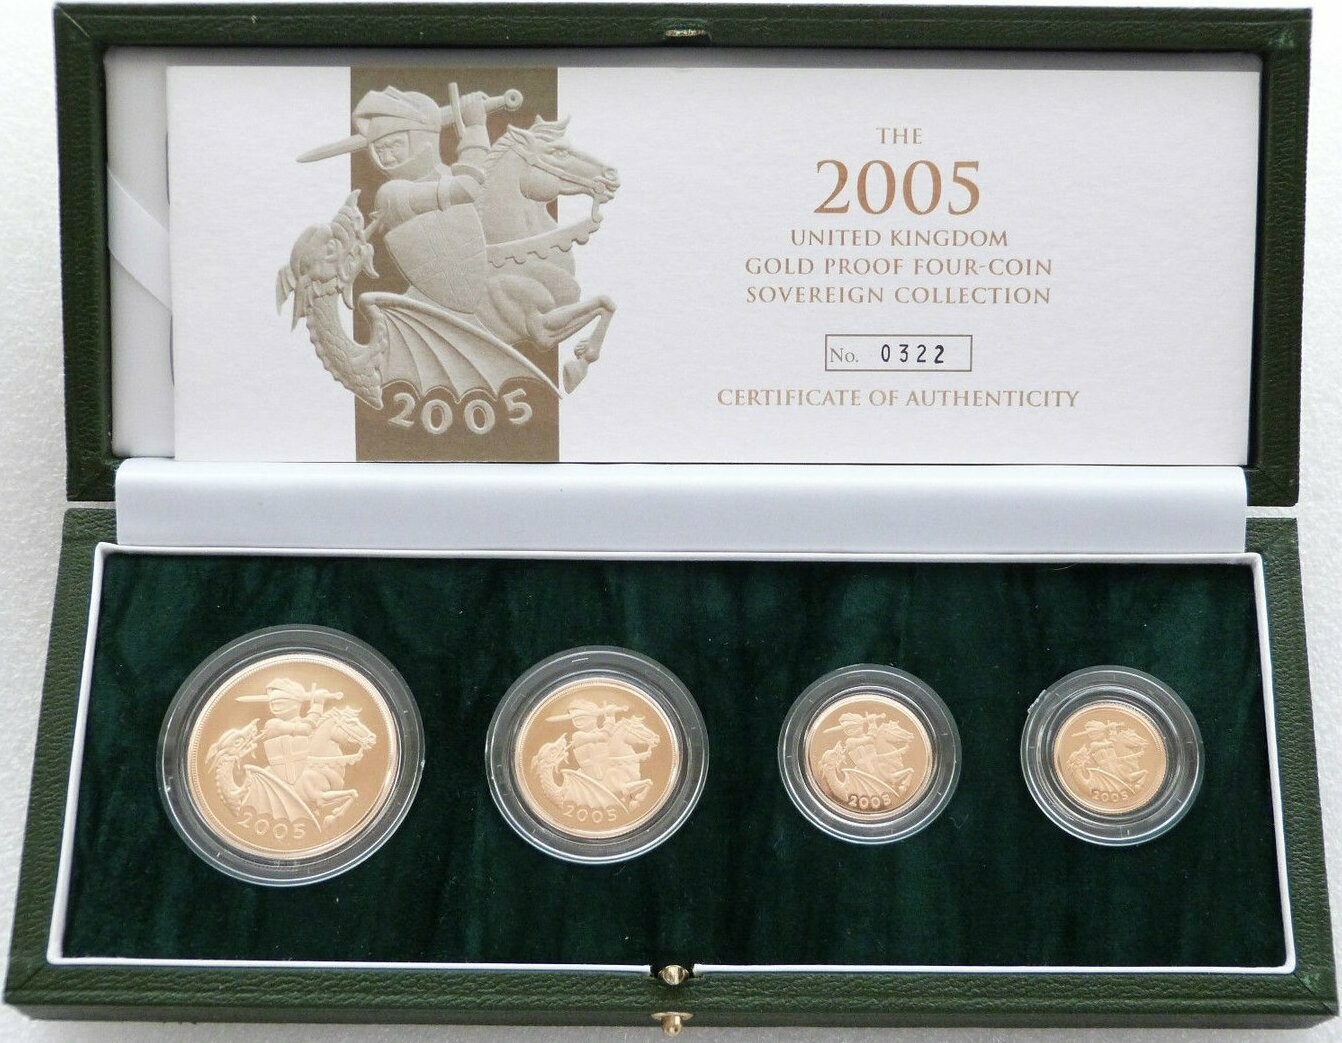 2005 Sovereign Gold Proof 4 Coin Set Box Coa - Timothy Noad